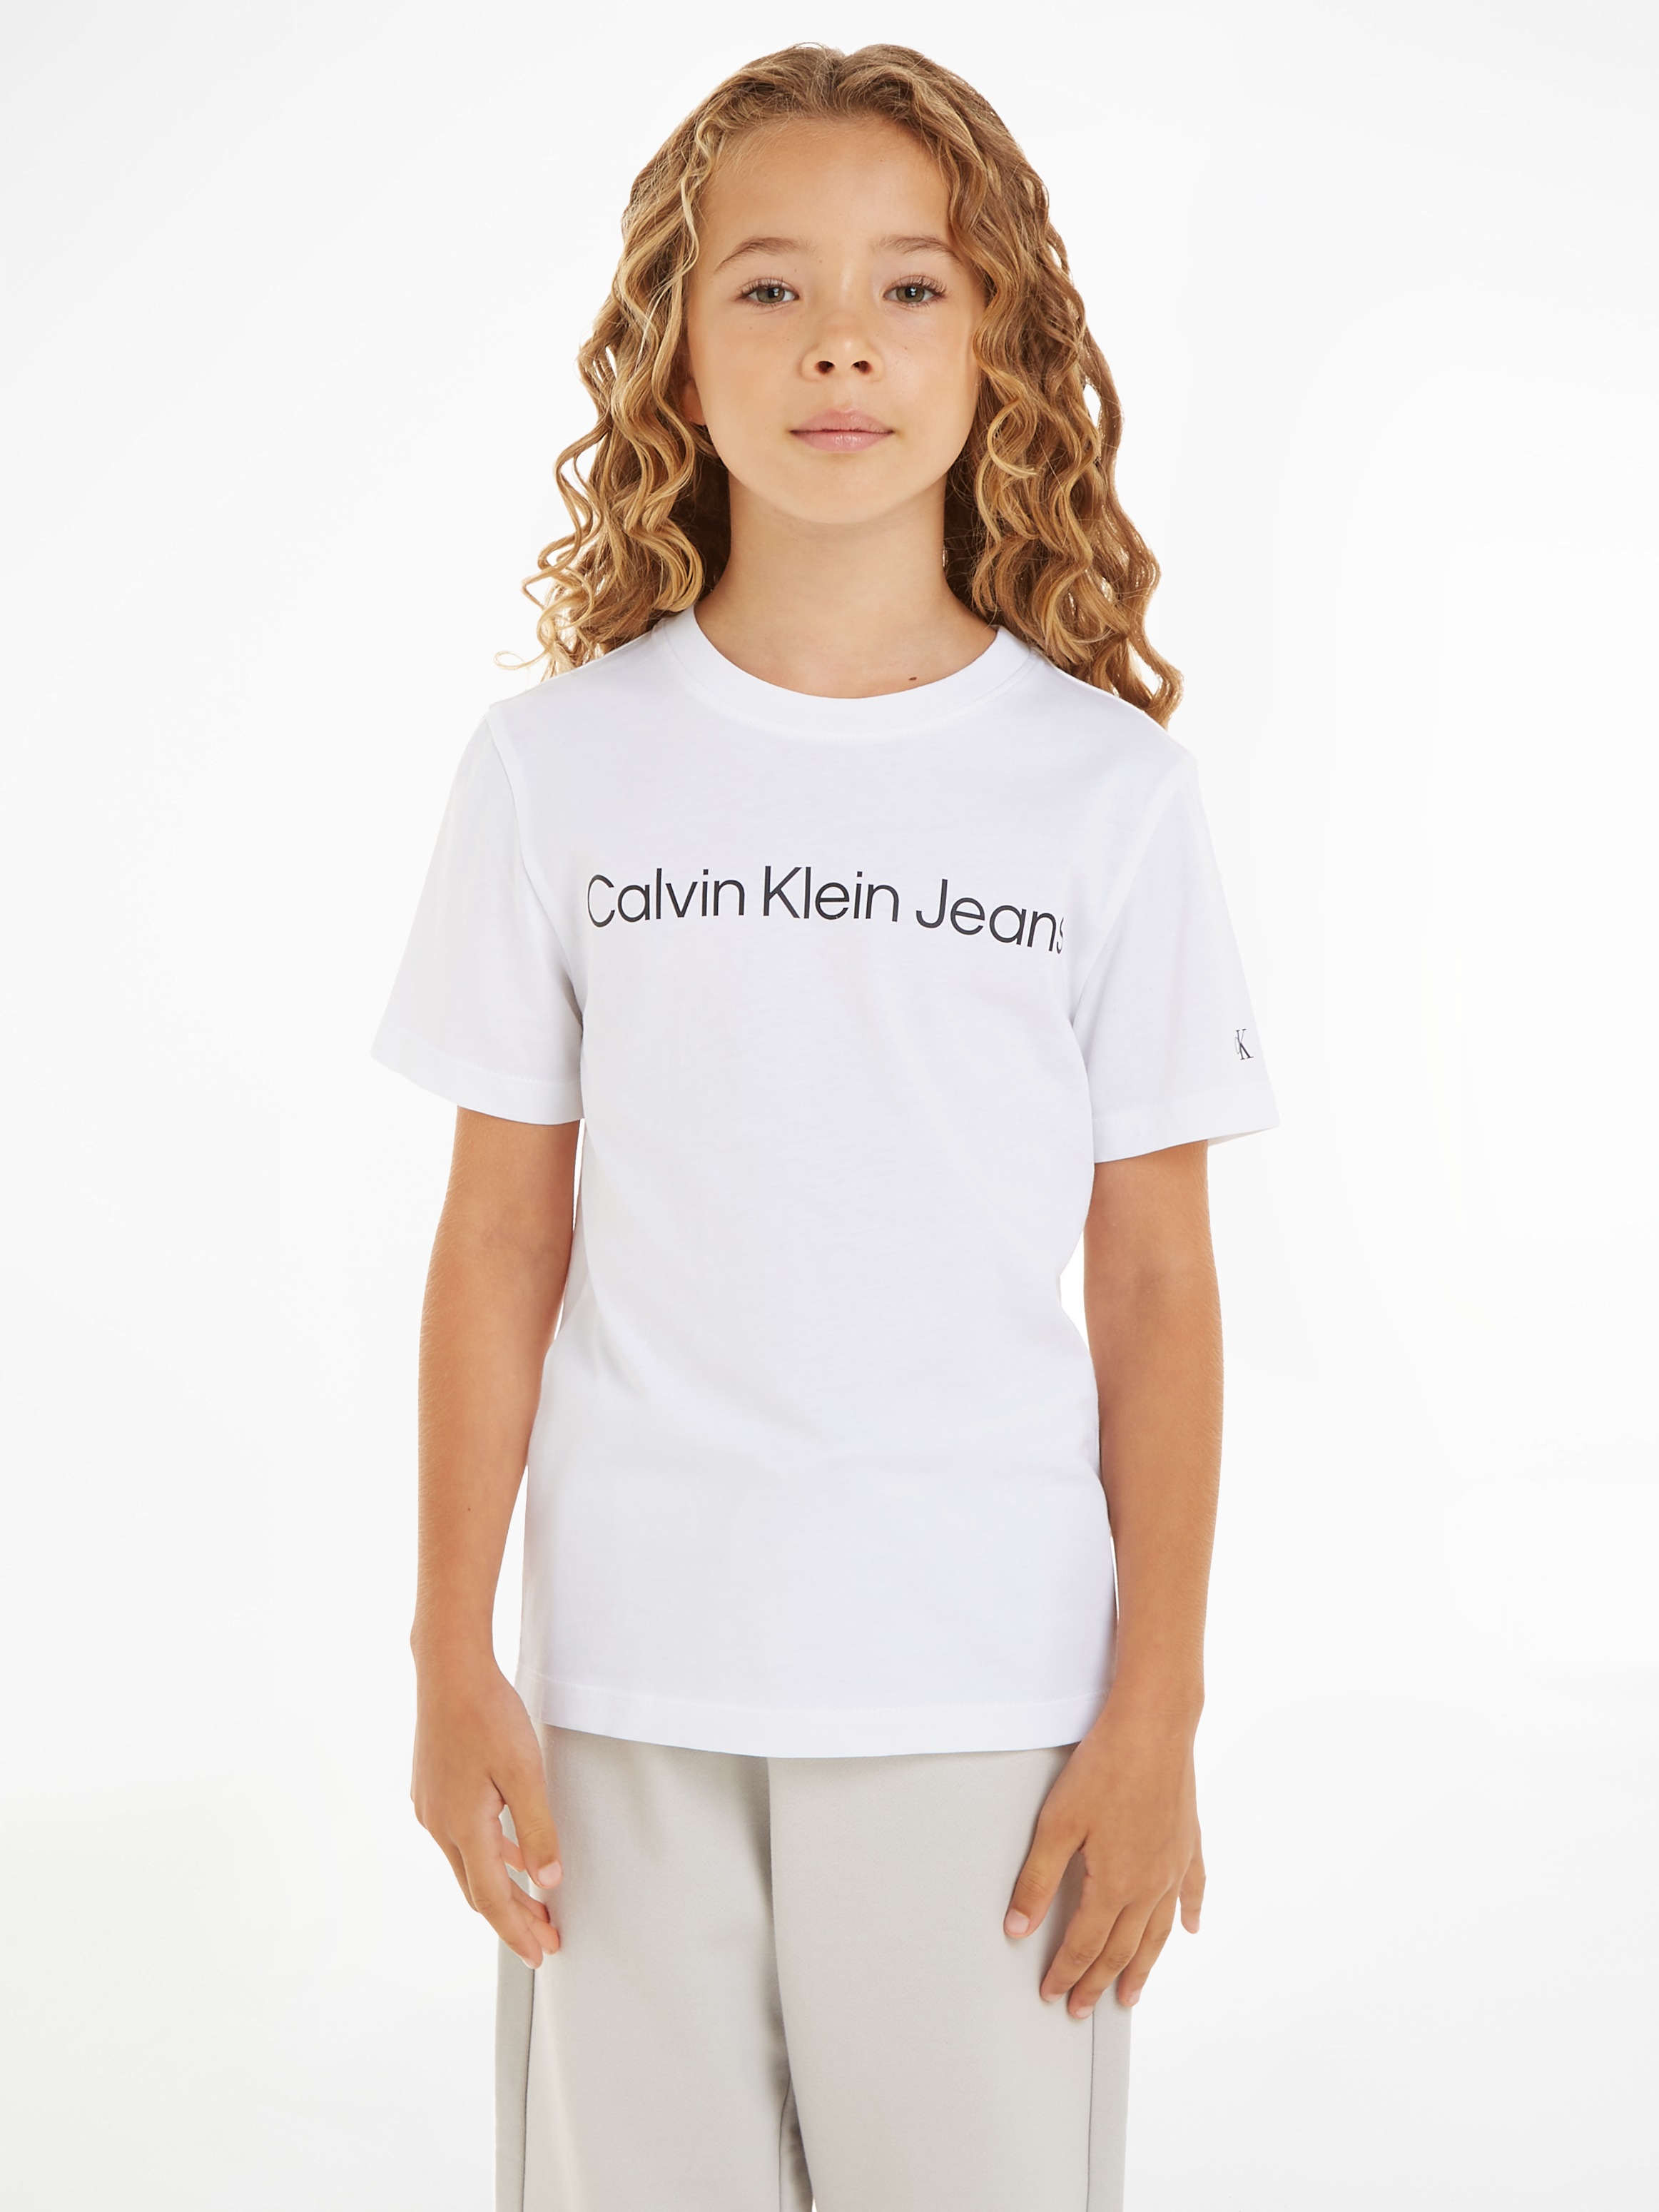 Black Friday Calvin Klein Jeans mit Logoschriftzug T-SHIRT«, SS BAUR Sweatshirt LOGO »INST. 